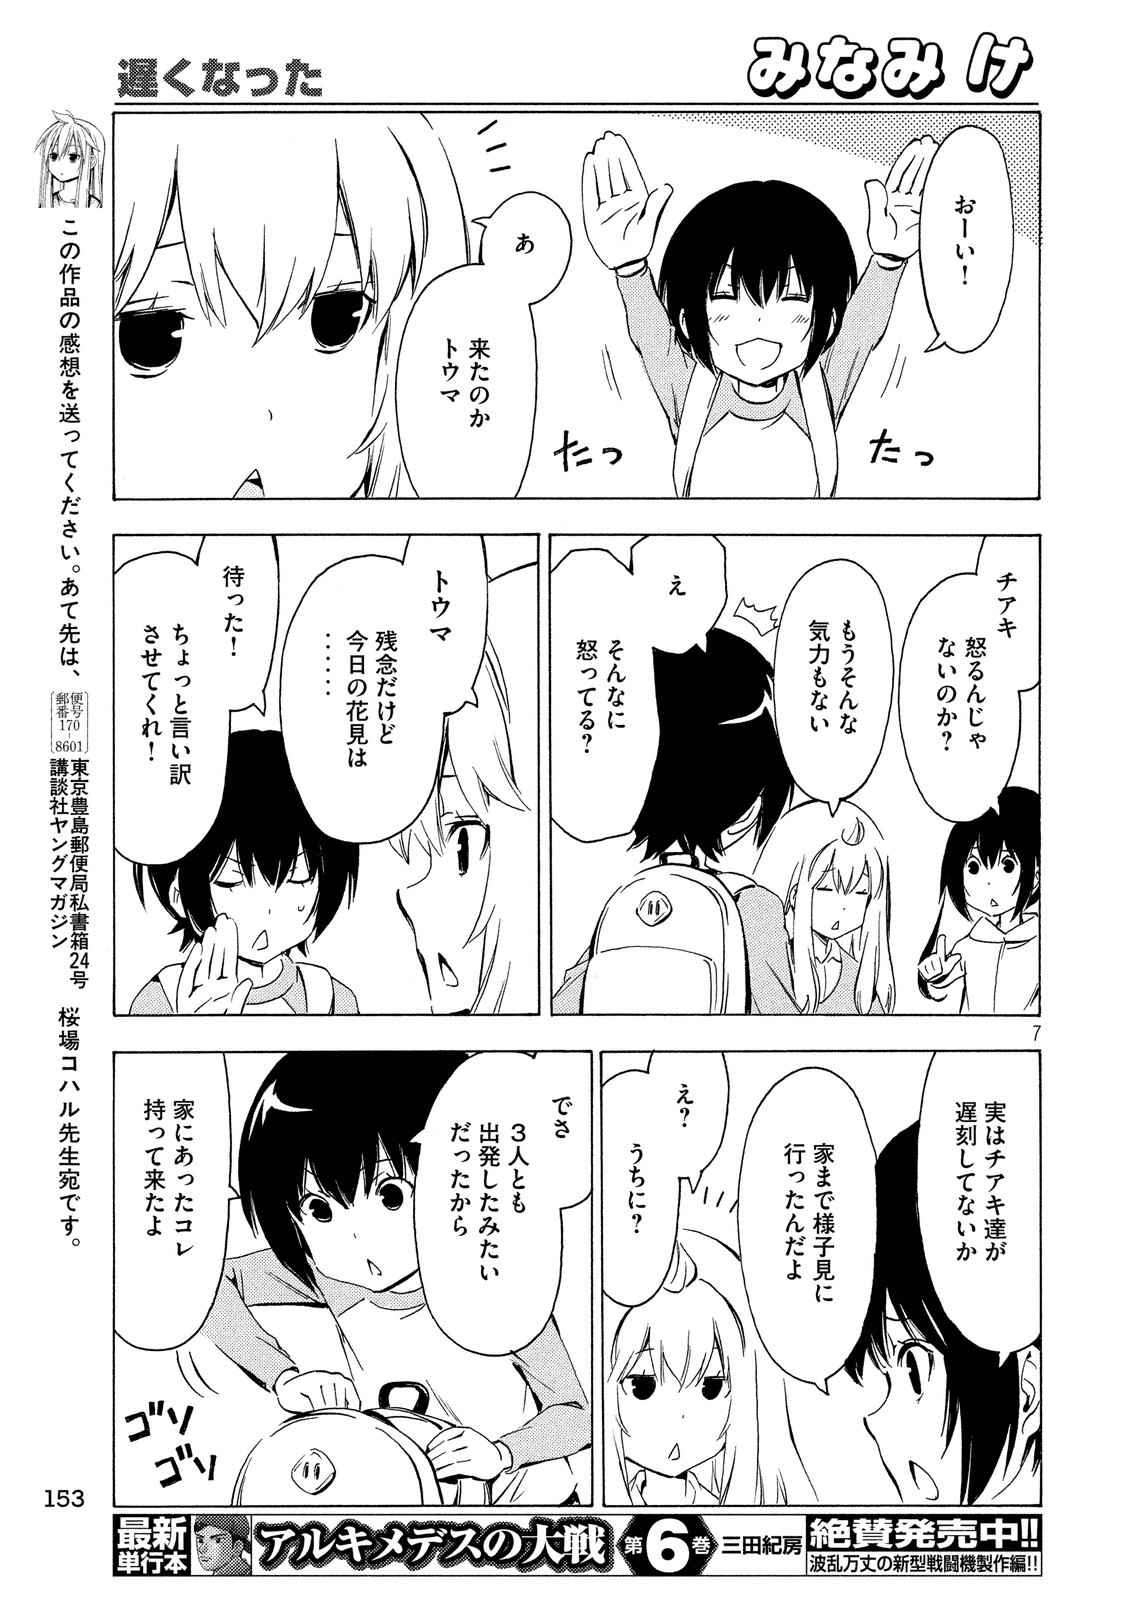 Minami-ke - Chapter 314 - Page 7